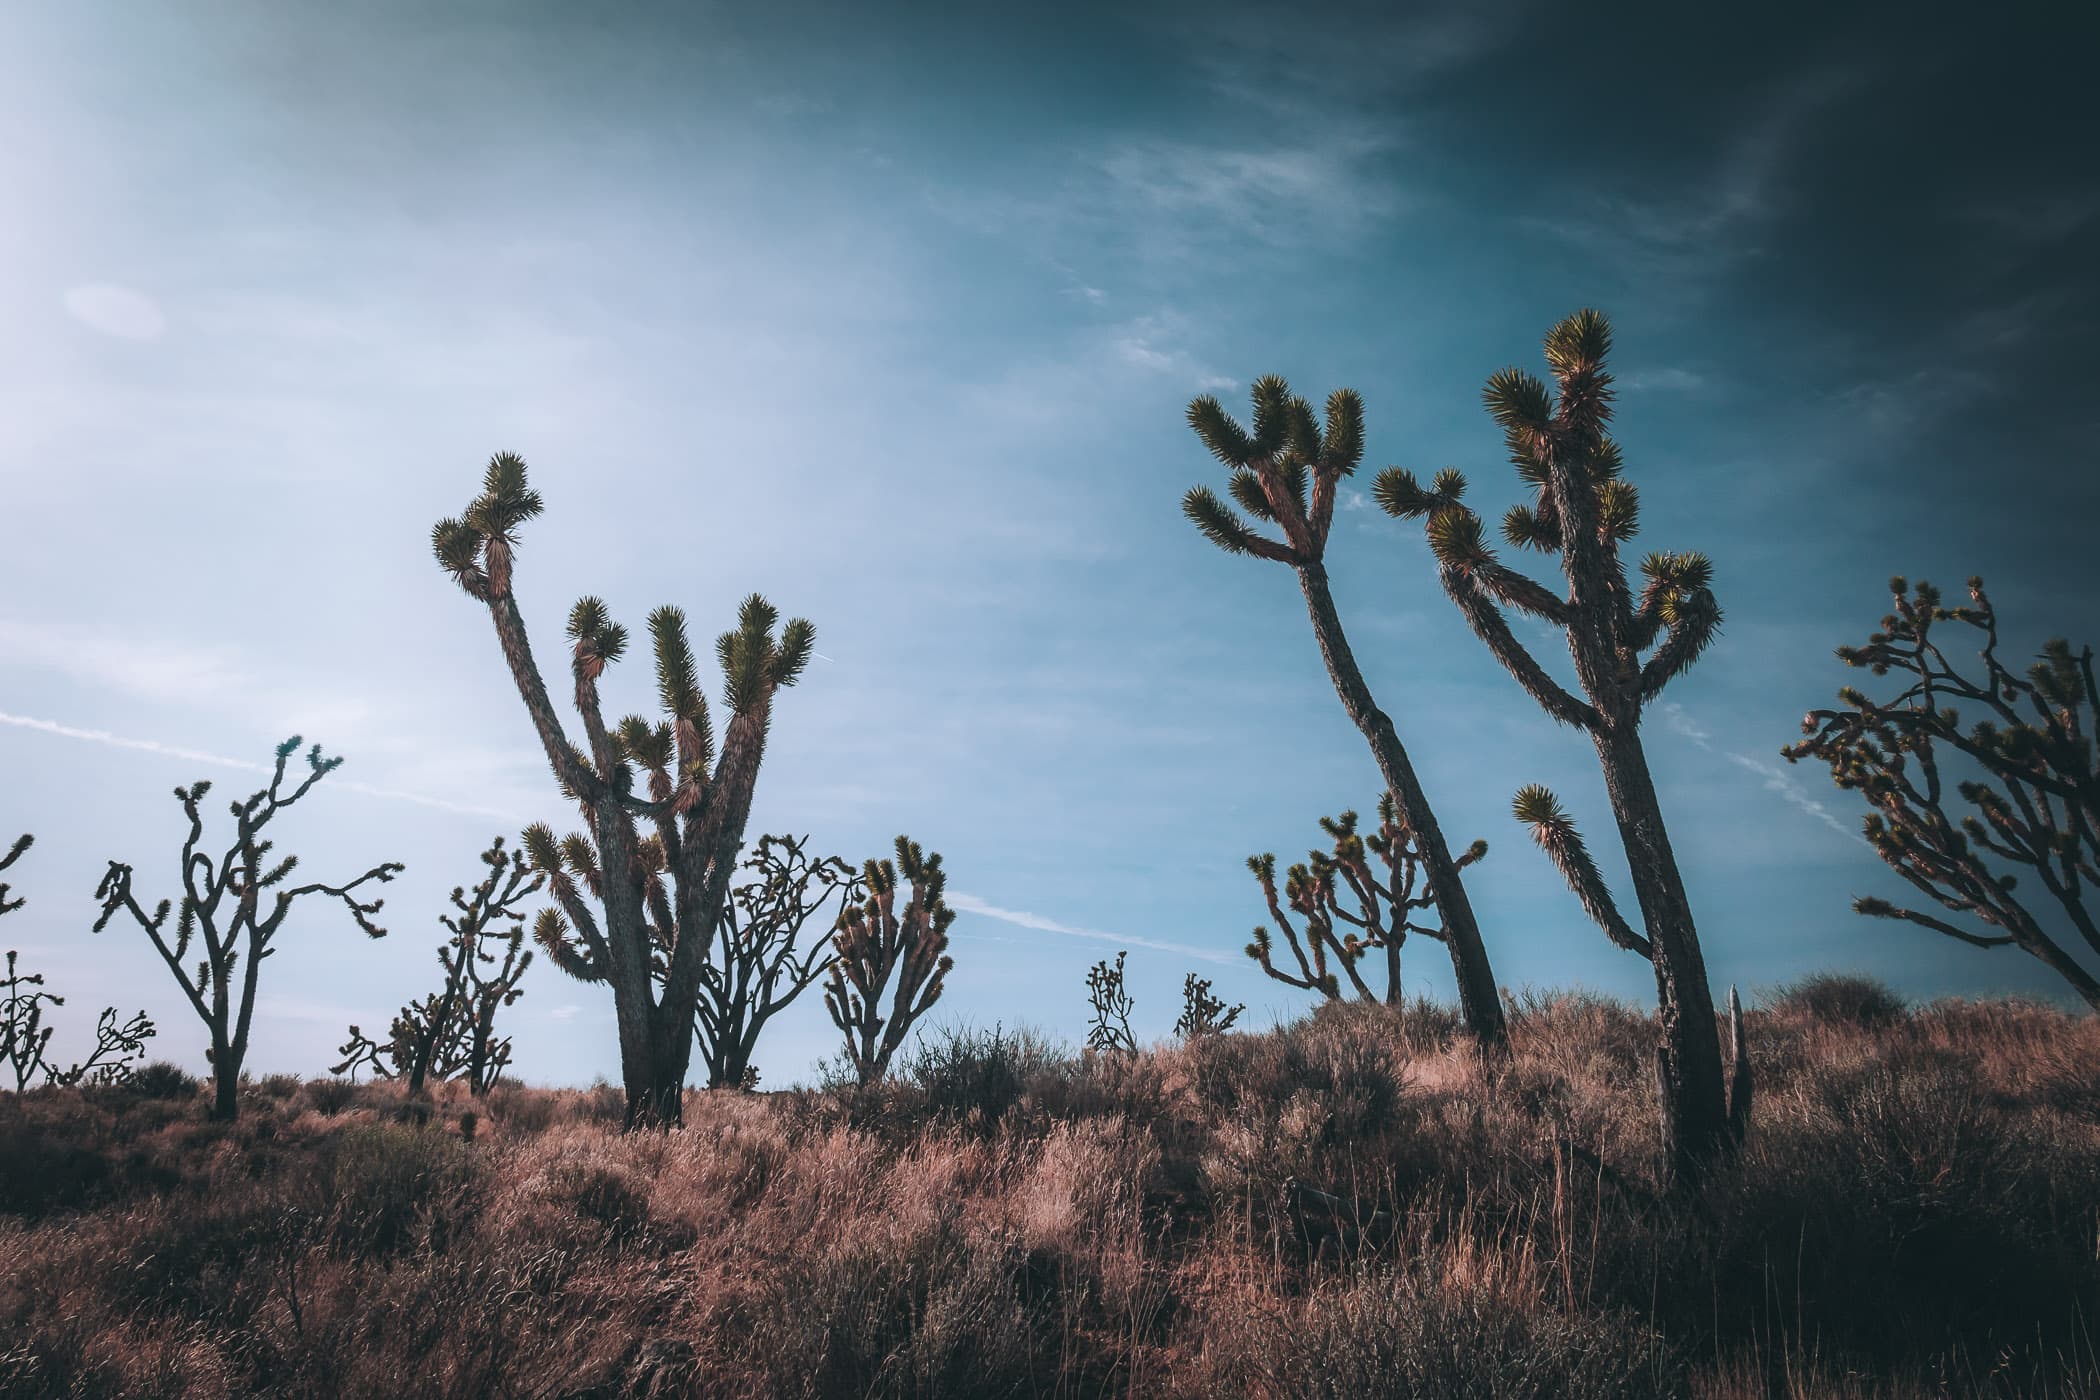 Joshua trees grow in the arid landscape of California's Mojave National Preserve.